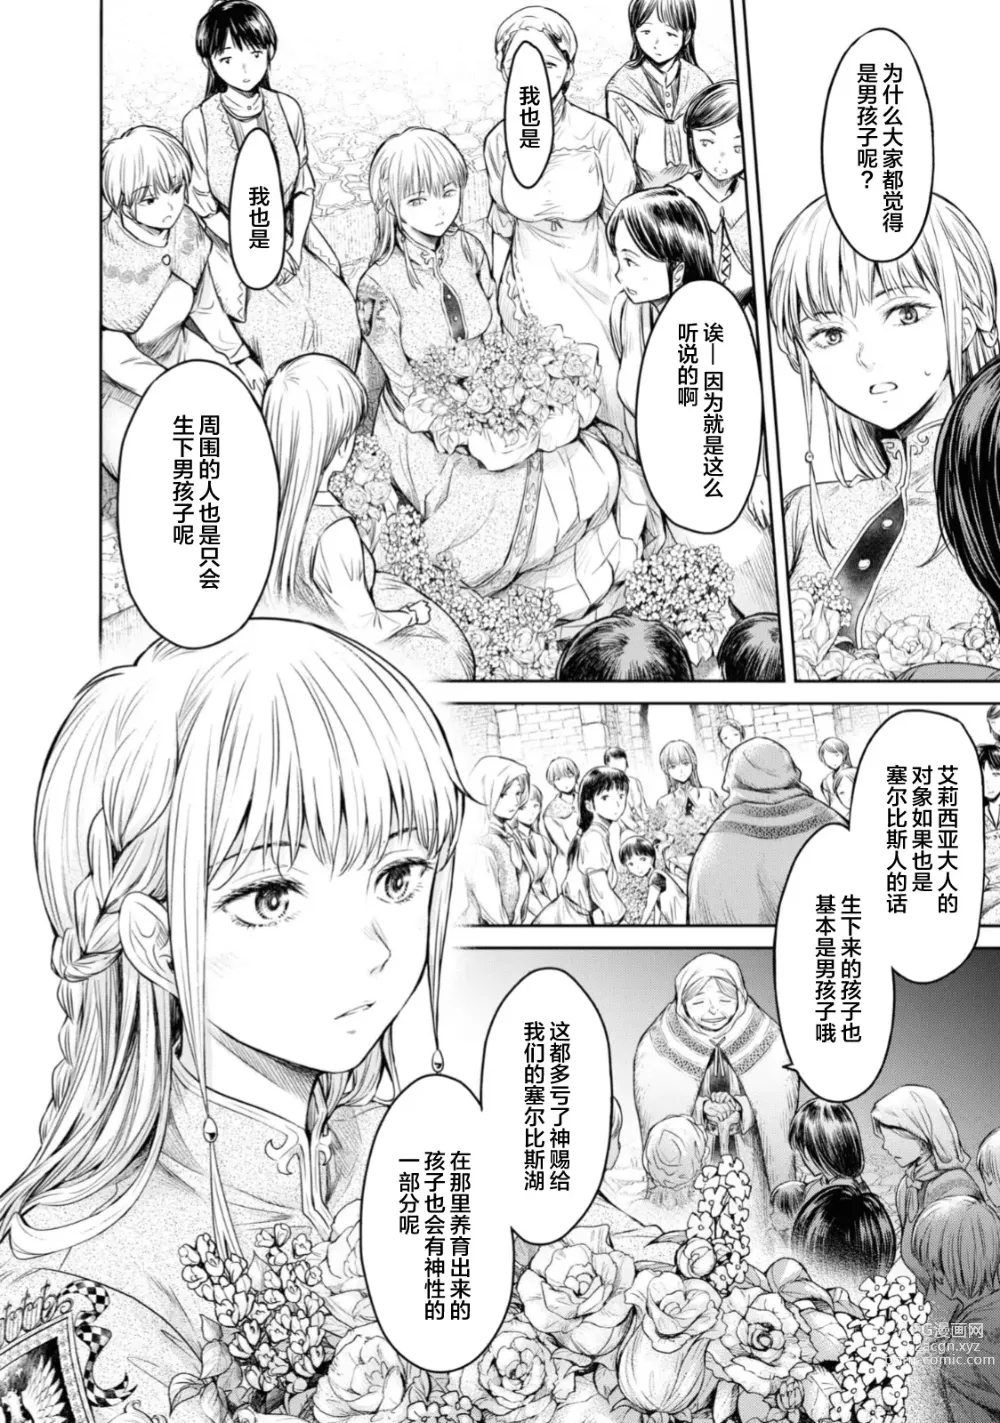 Page 15 of manga Nageki no Alicia - Sorrow of Alicia Bunsatsuban: 4